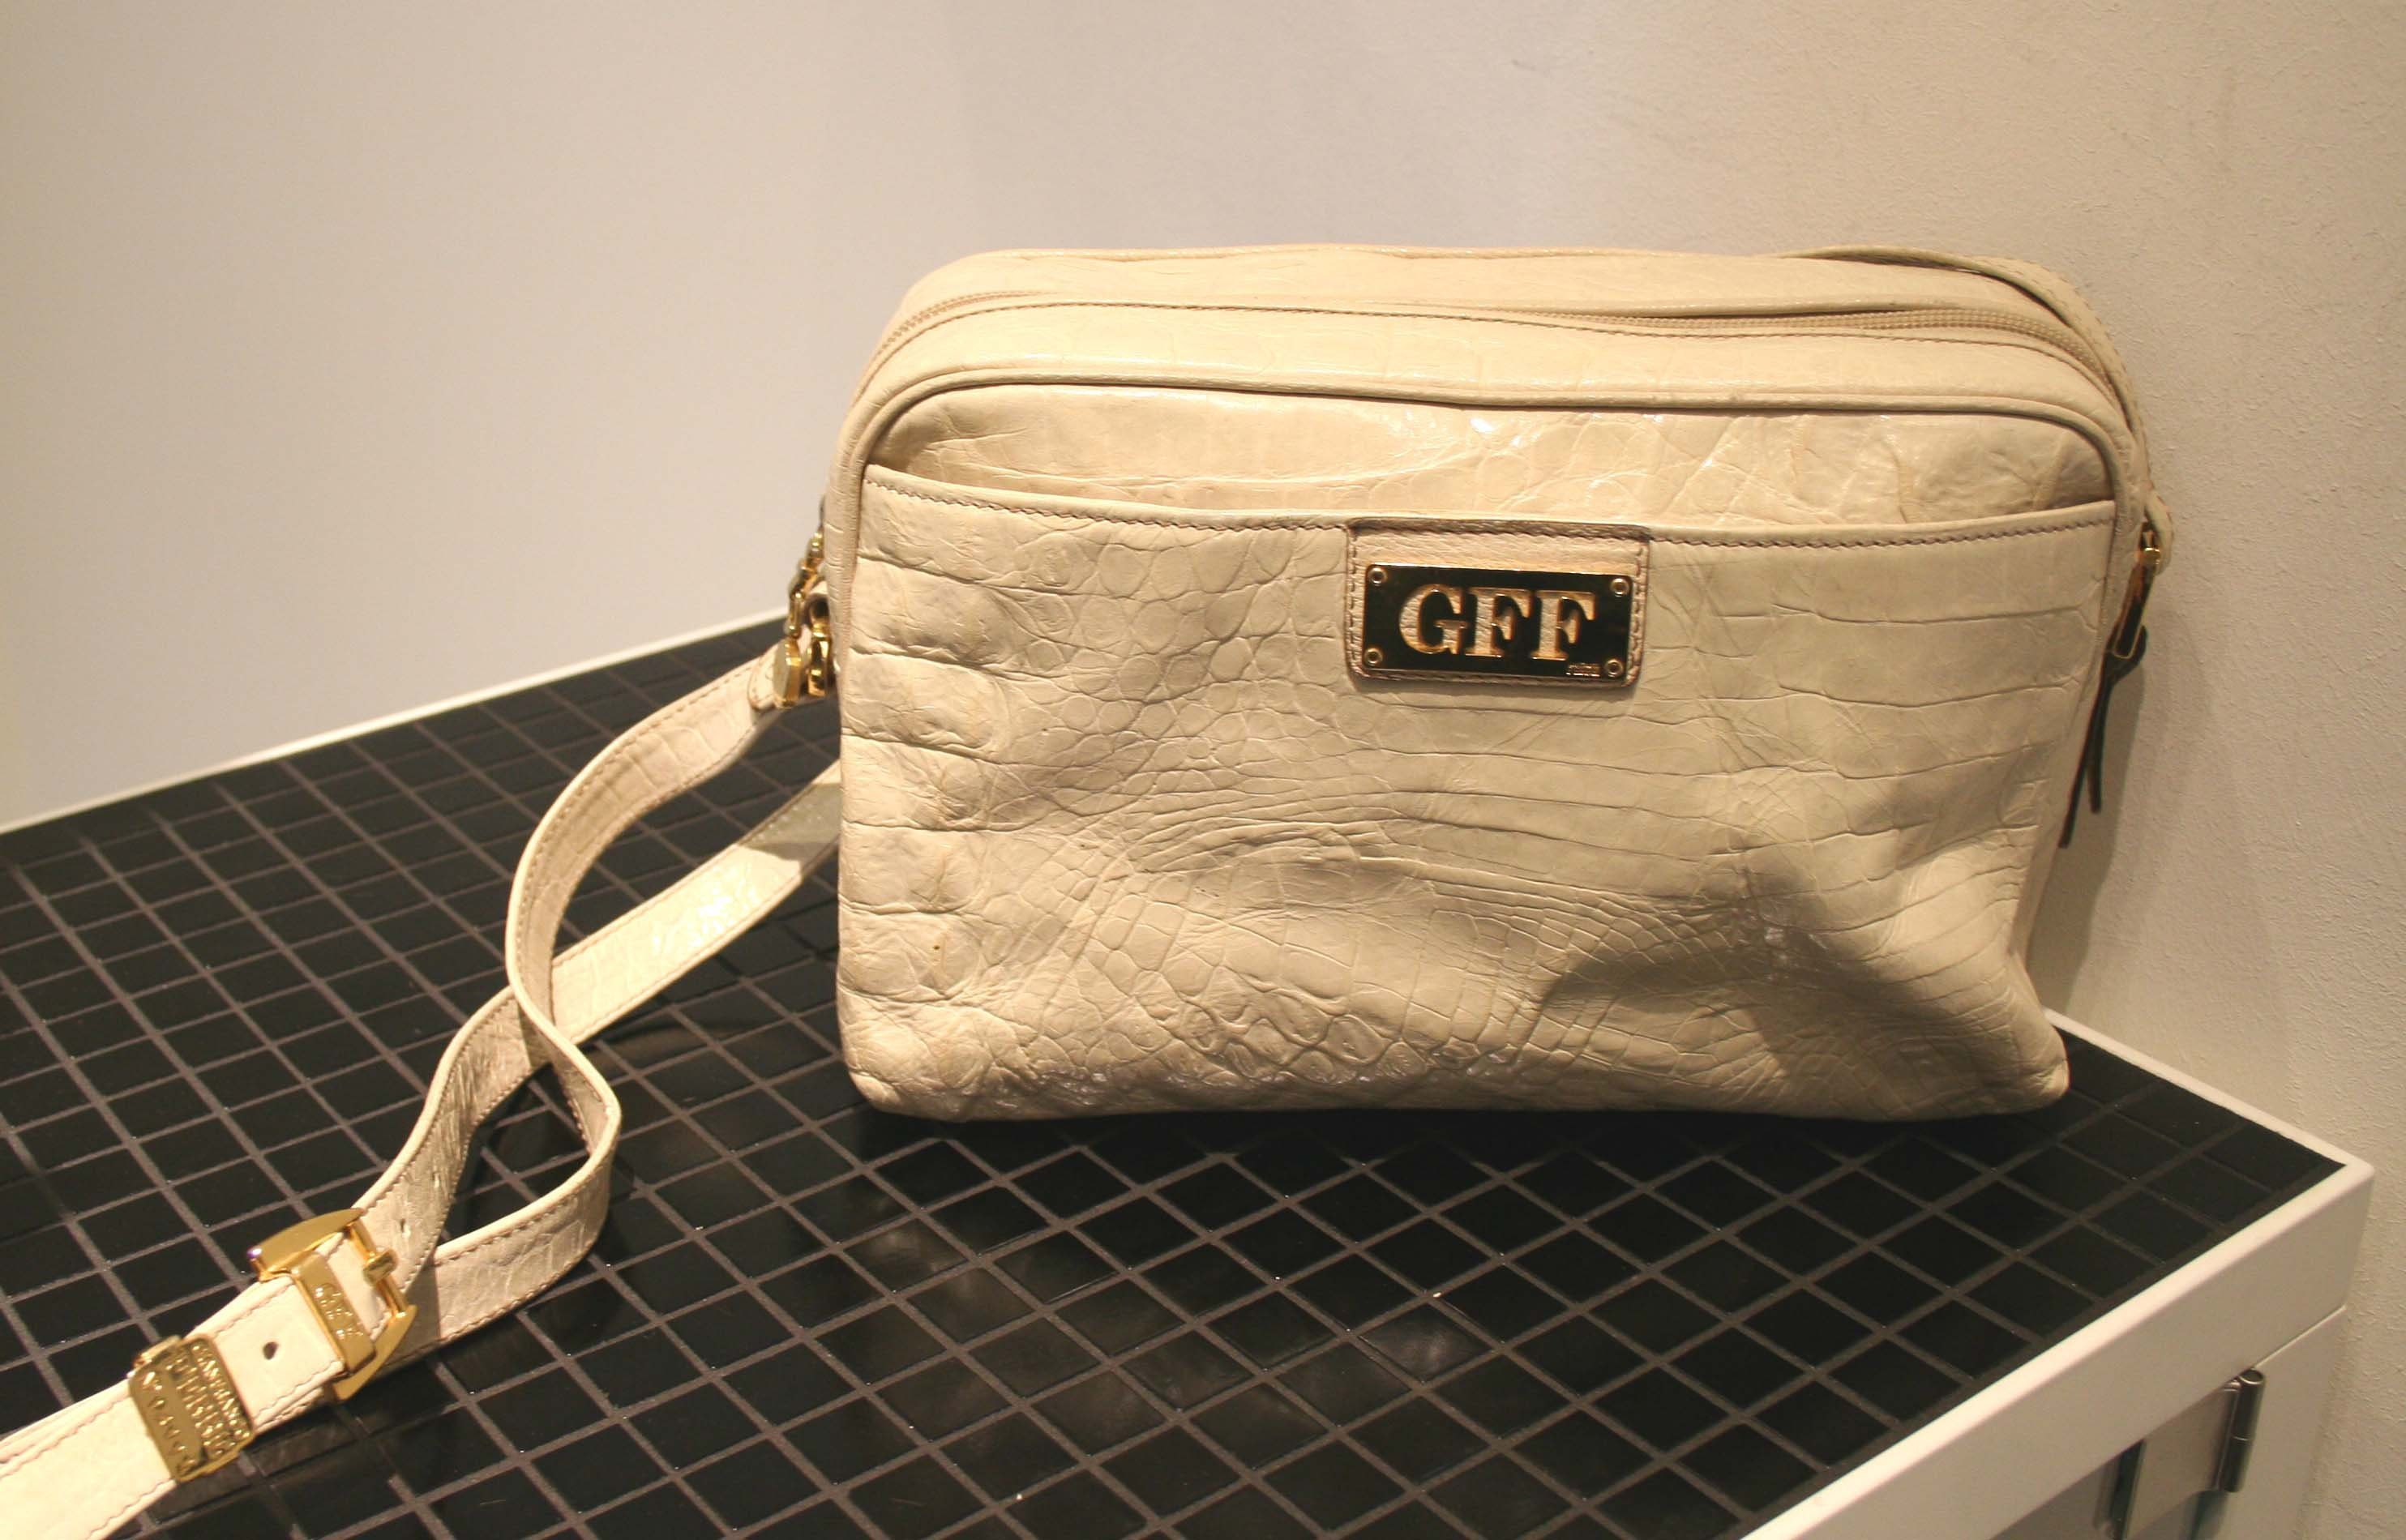 FERRE Crocodile - With White Embossing, Original Vintage Handbag, Leather Etsy Cream GFF, Bag,